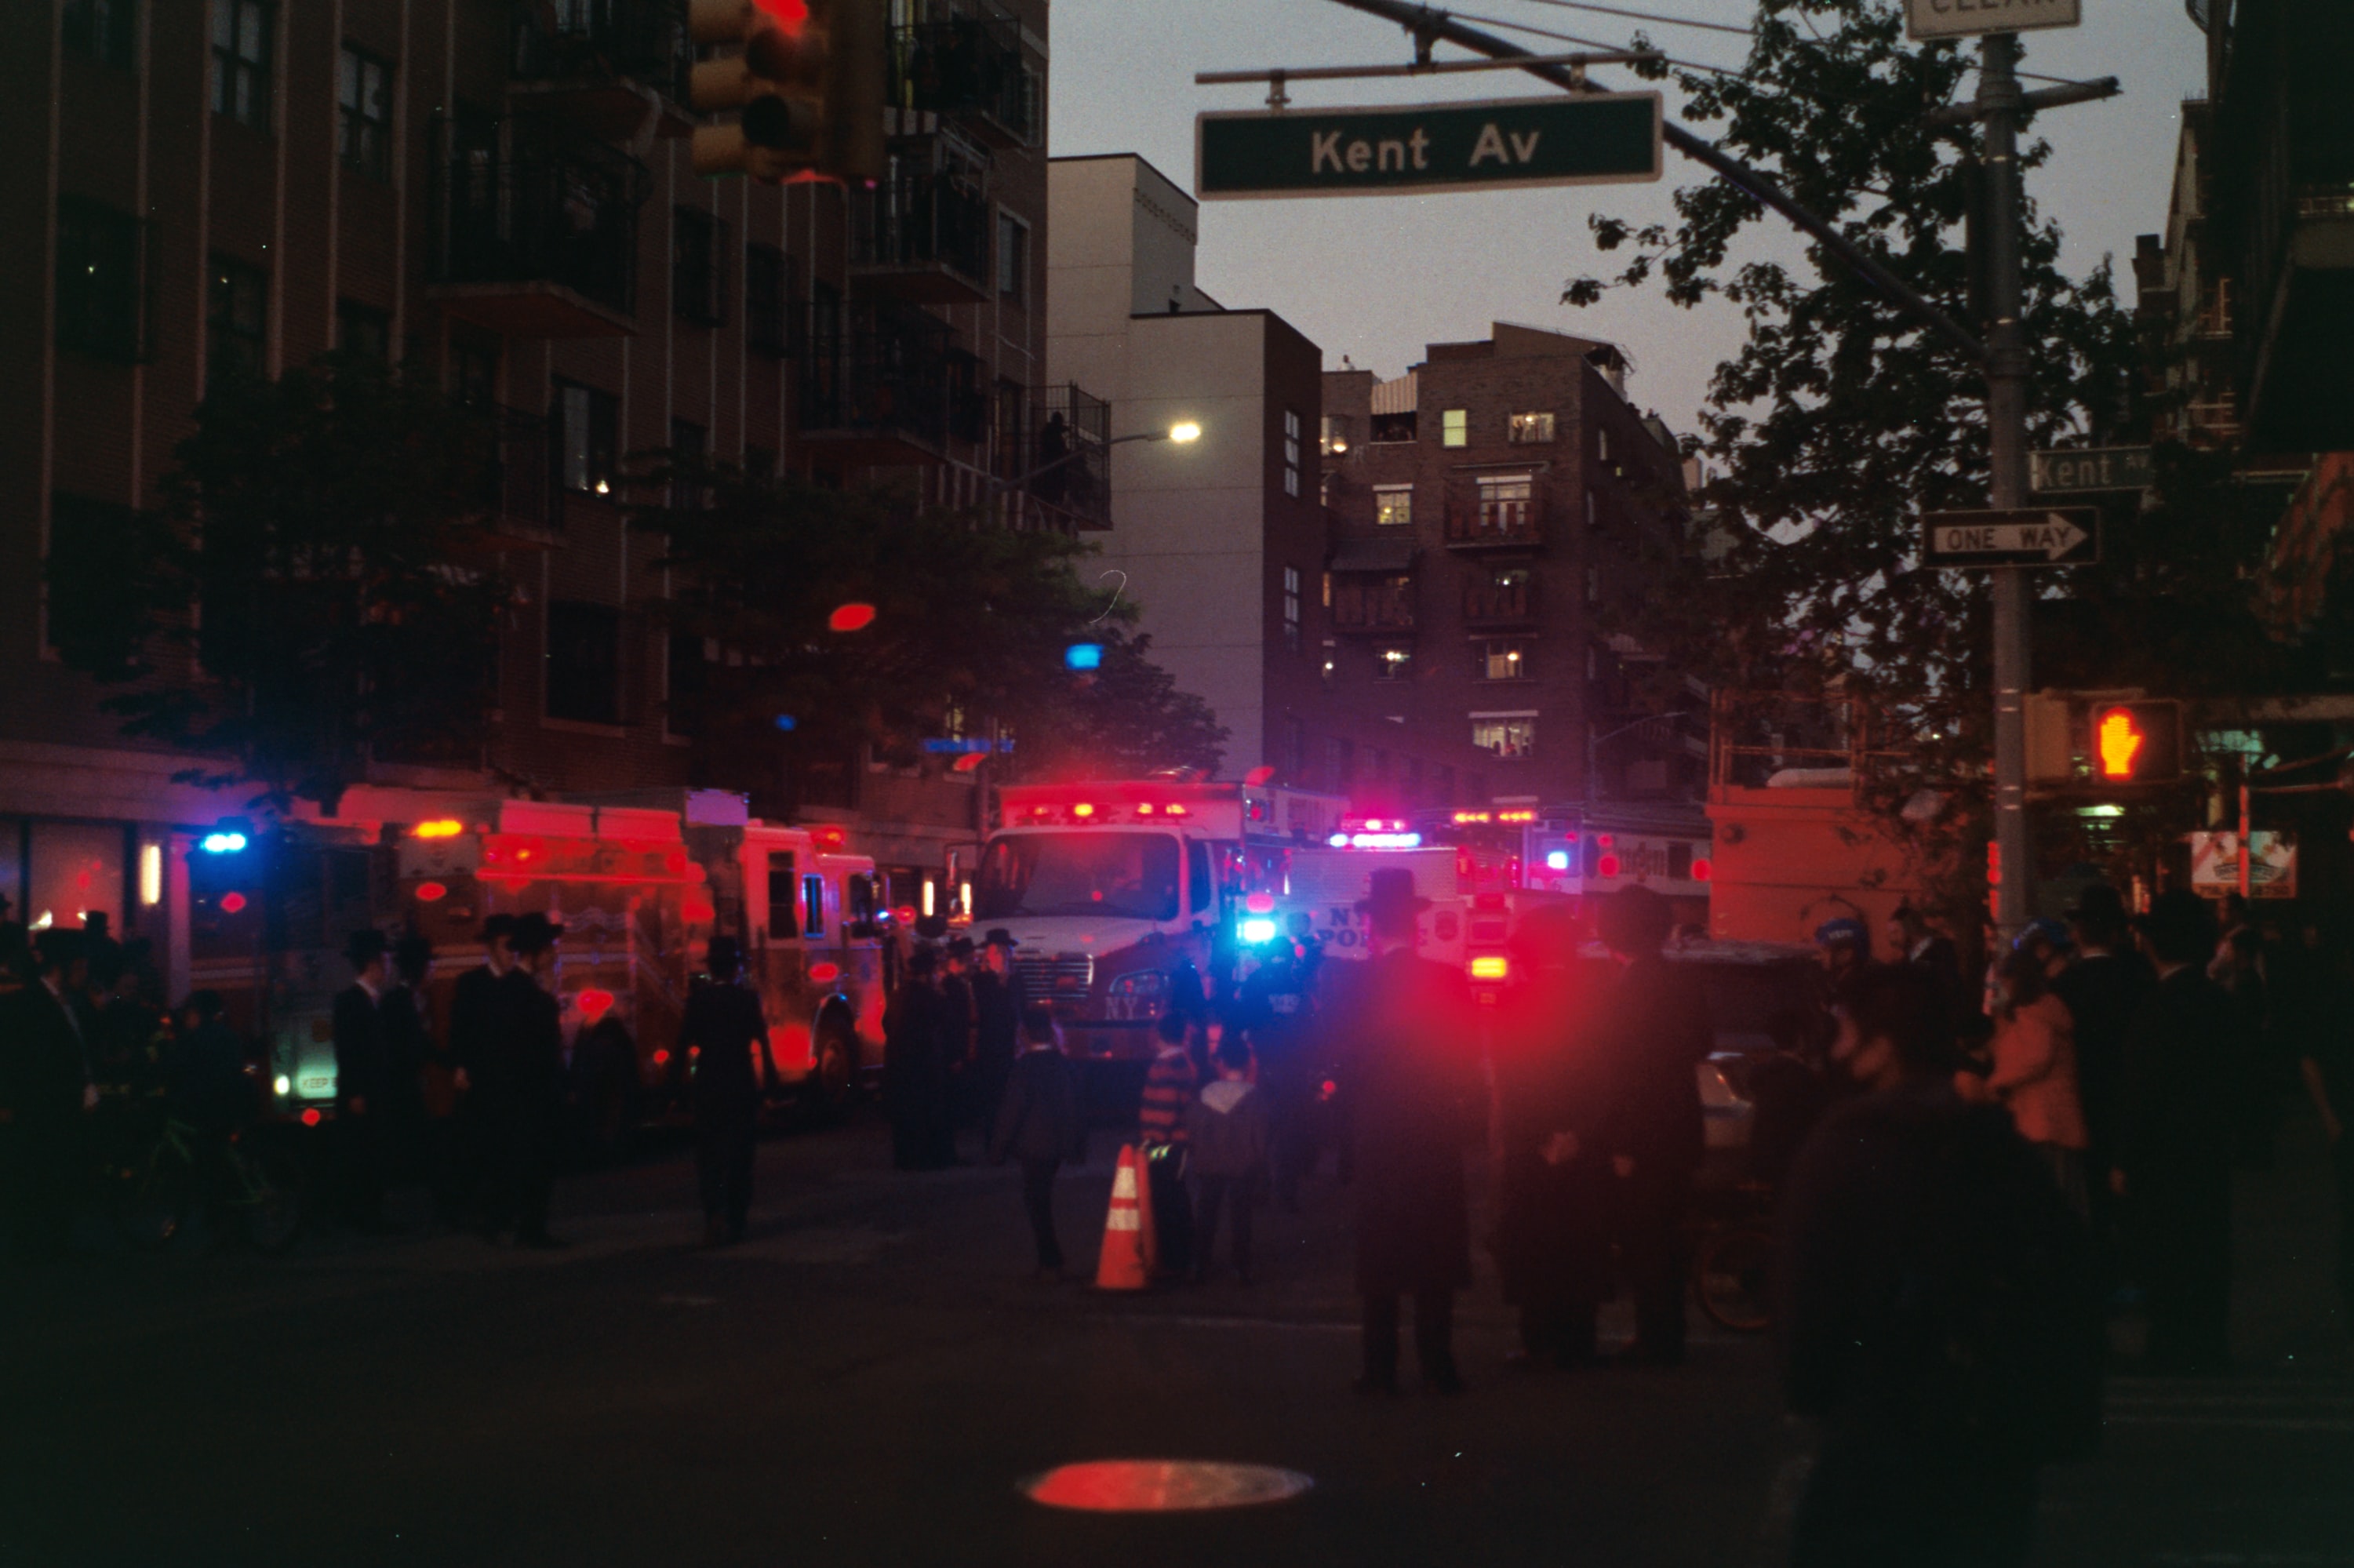 Emergency vehicles at night; image by Nate Isaac, via Unsplash.com.